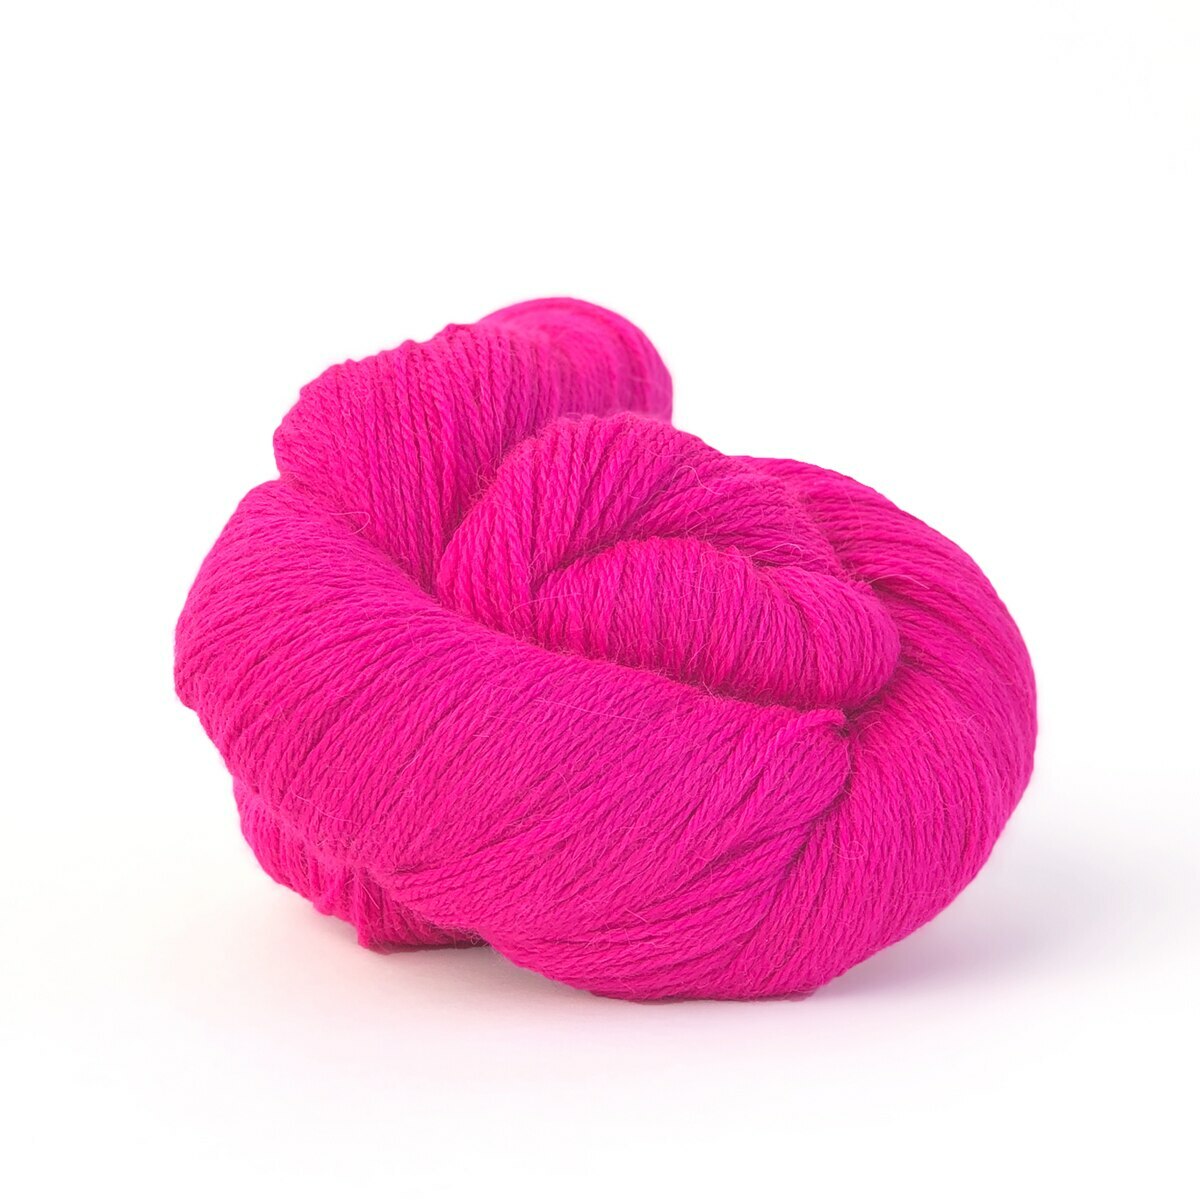 Coles River Kerchief Kit (Neon Pink)